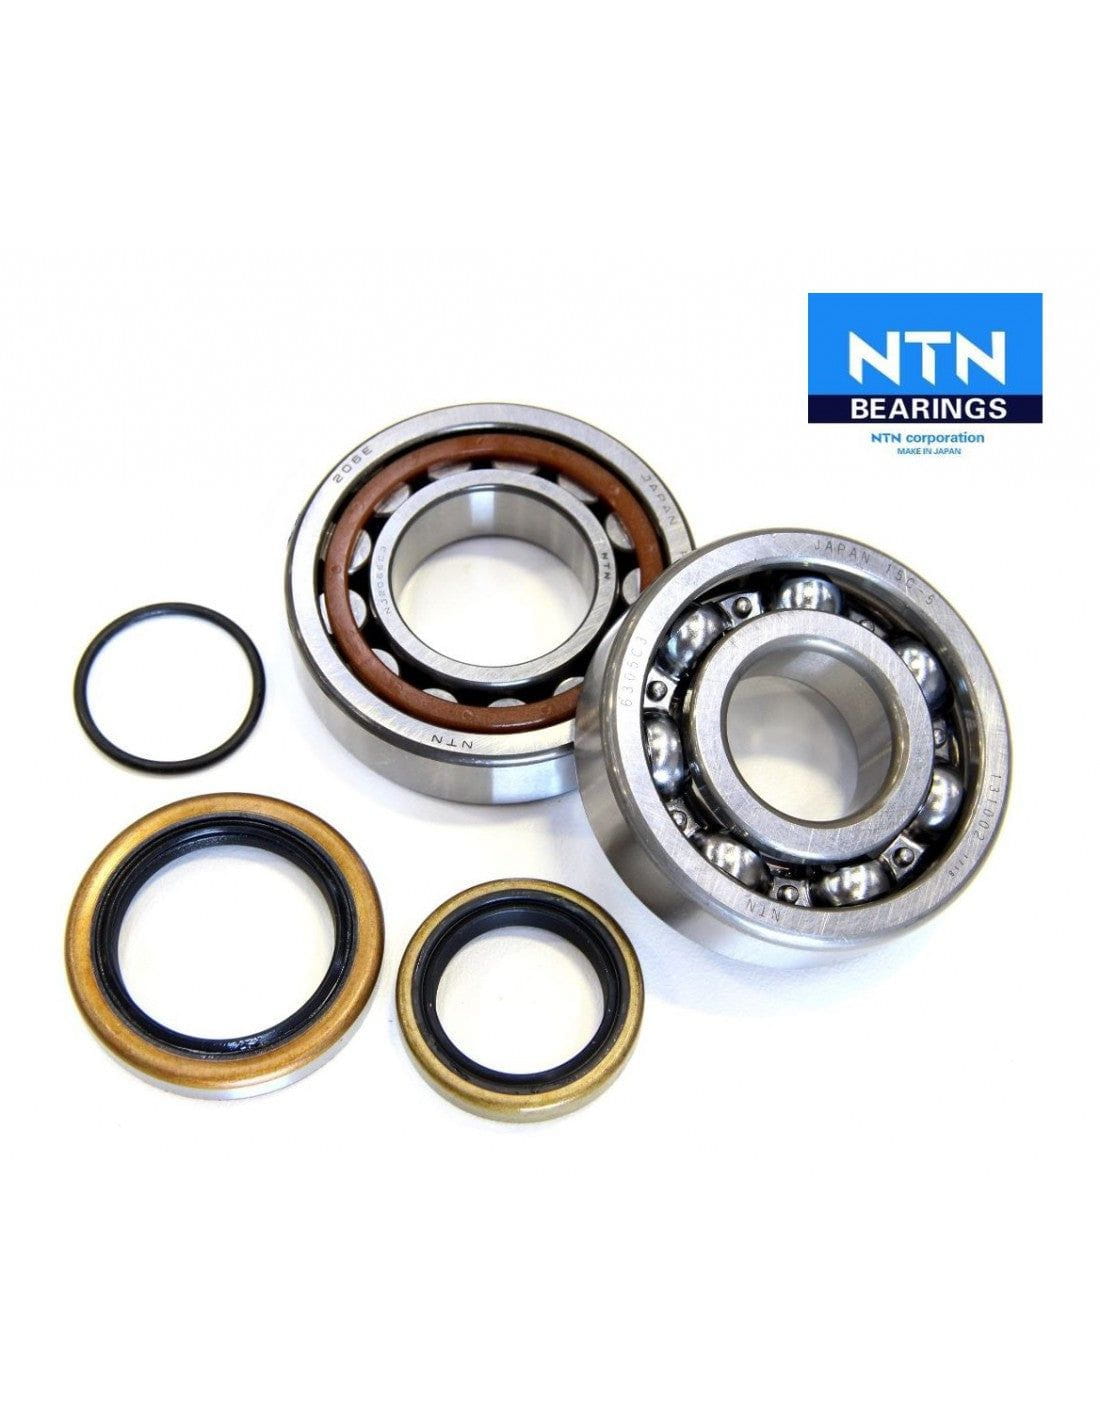 NTN Crankshaft bearings and seals kit KTM 2T 250/300 '11-'25